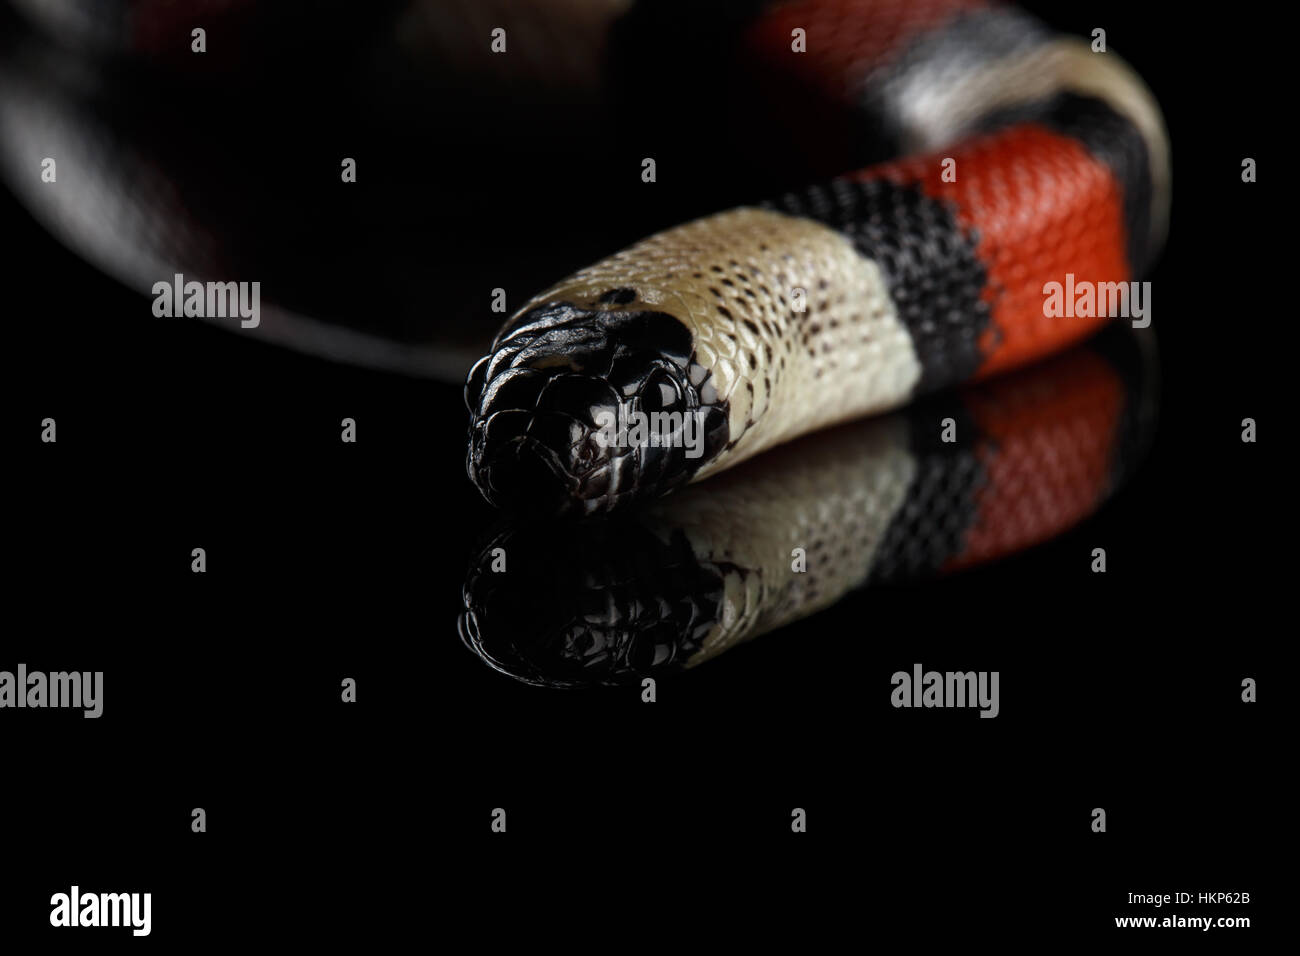 Campbell's milk snake, Lampropeltis triangulum campbelli, isolated on black background Stock Photo